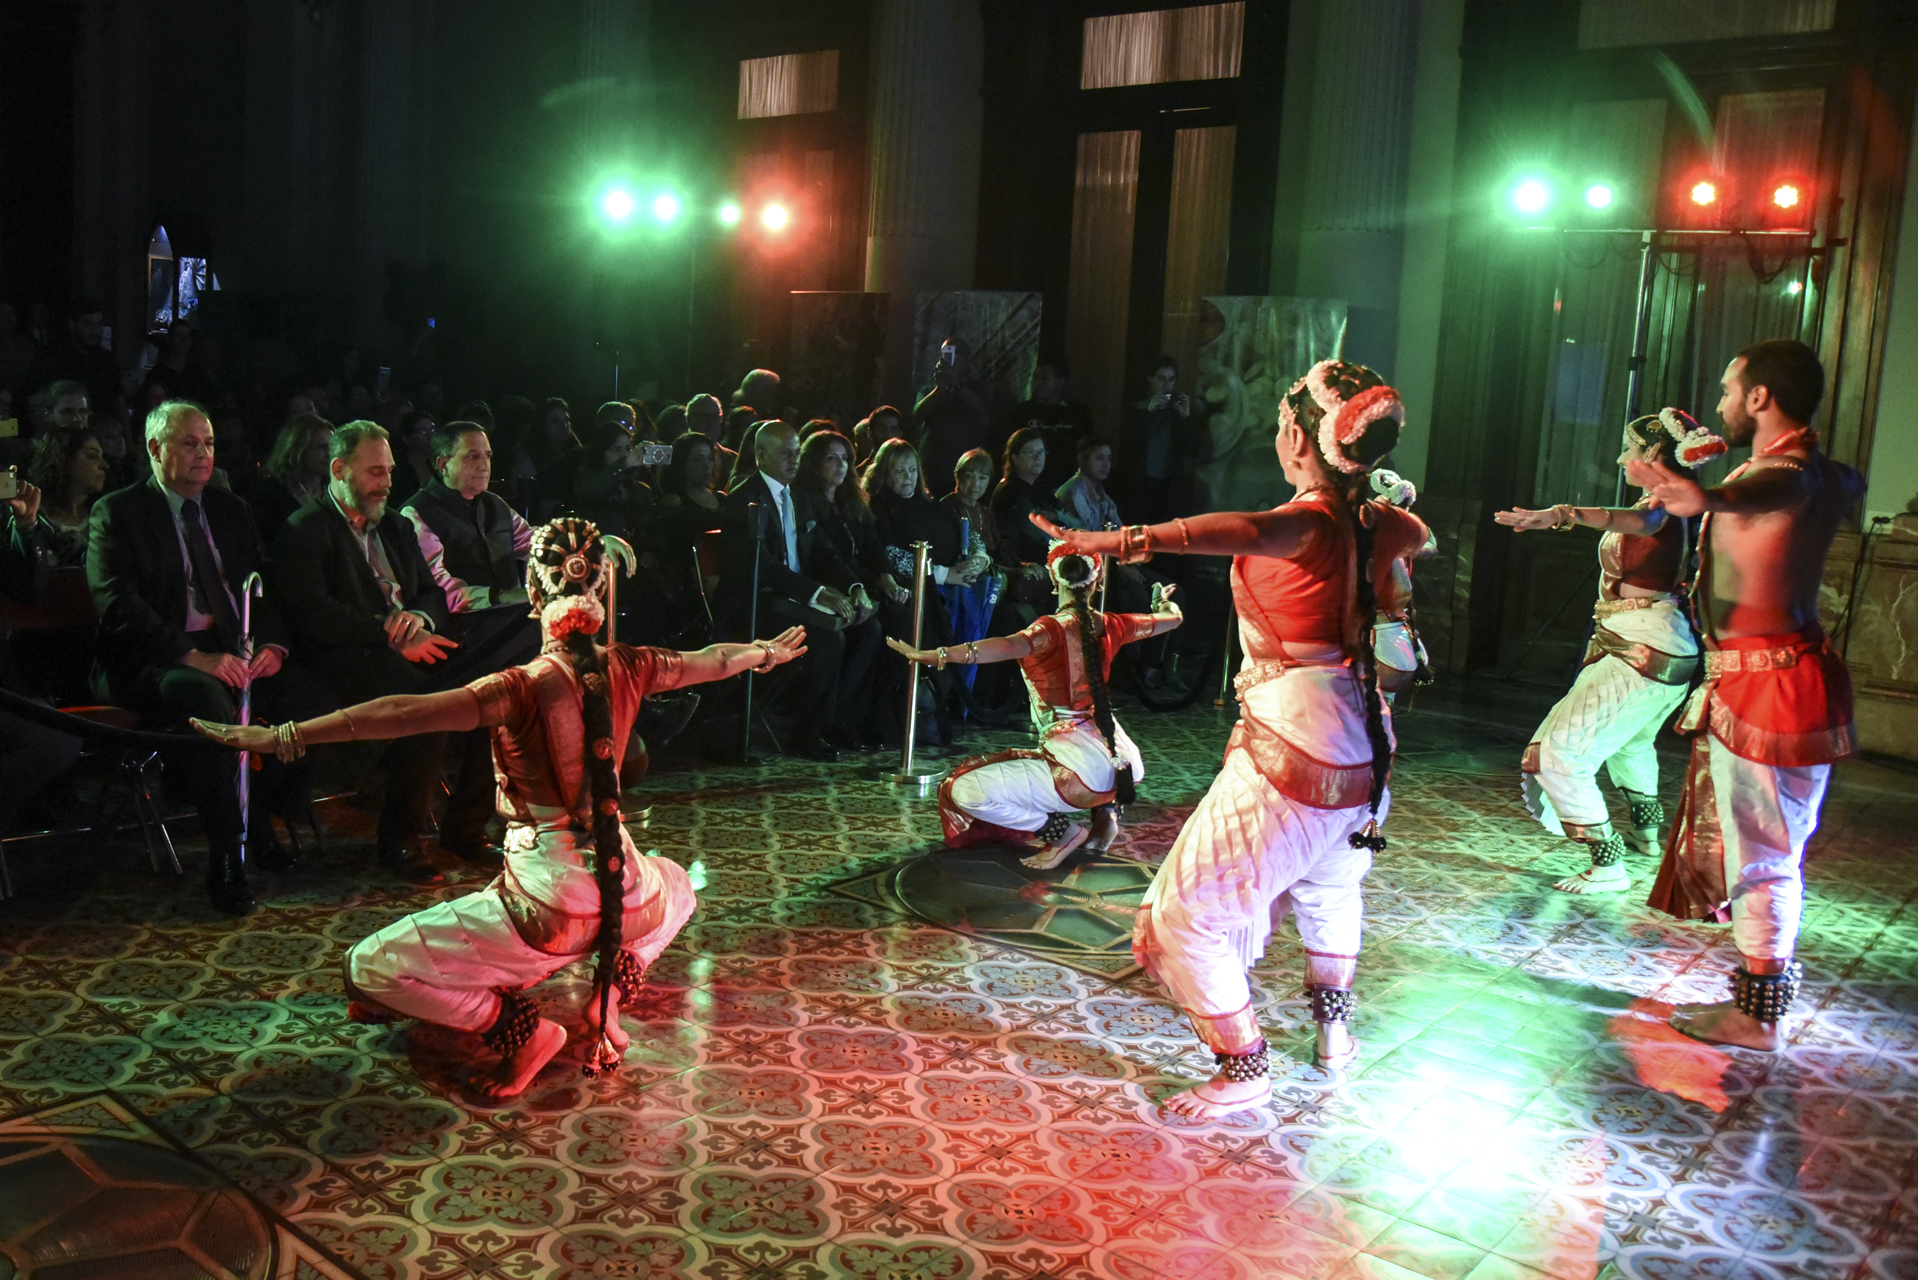 Diputados realizaron una jornada cultural sobre la India